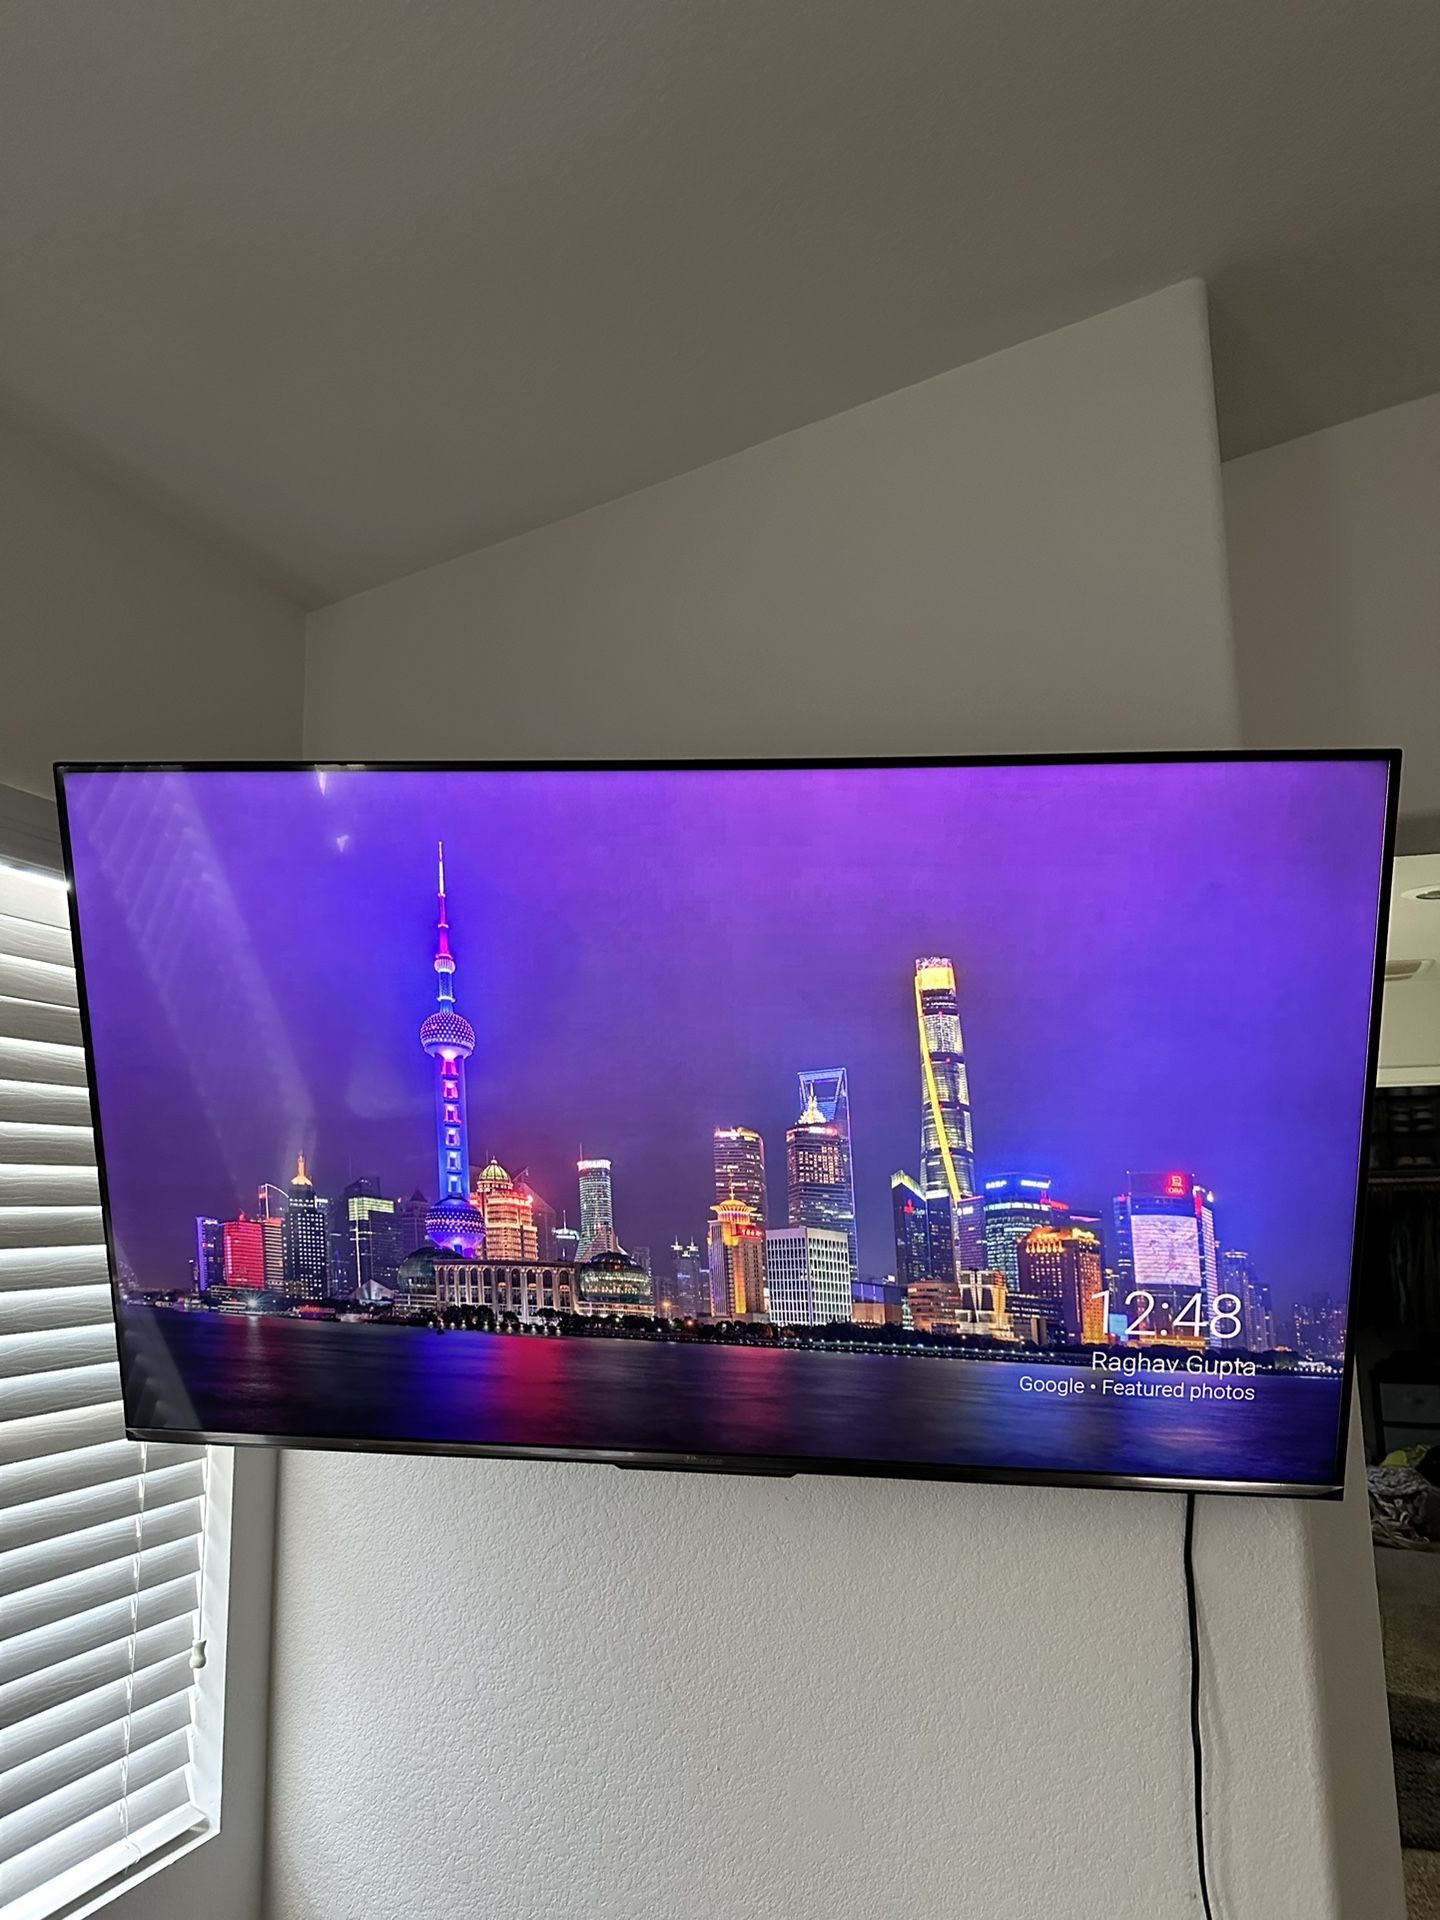 55” Hiense LED LCD TV